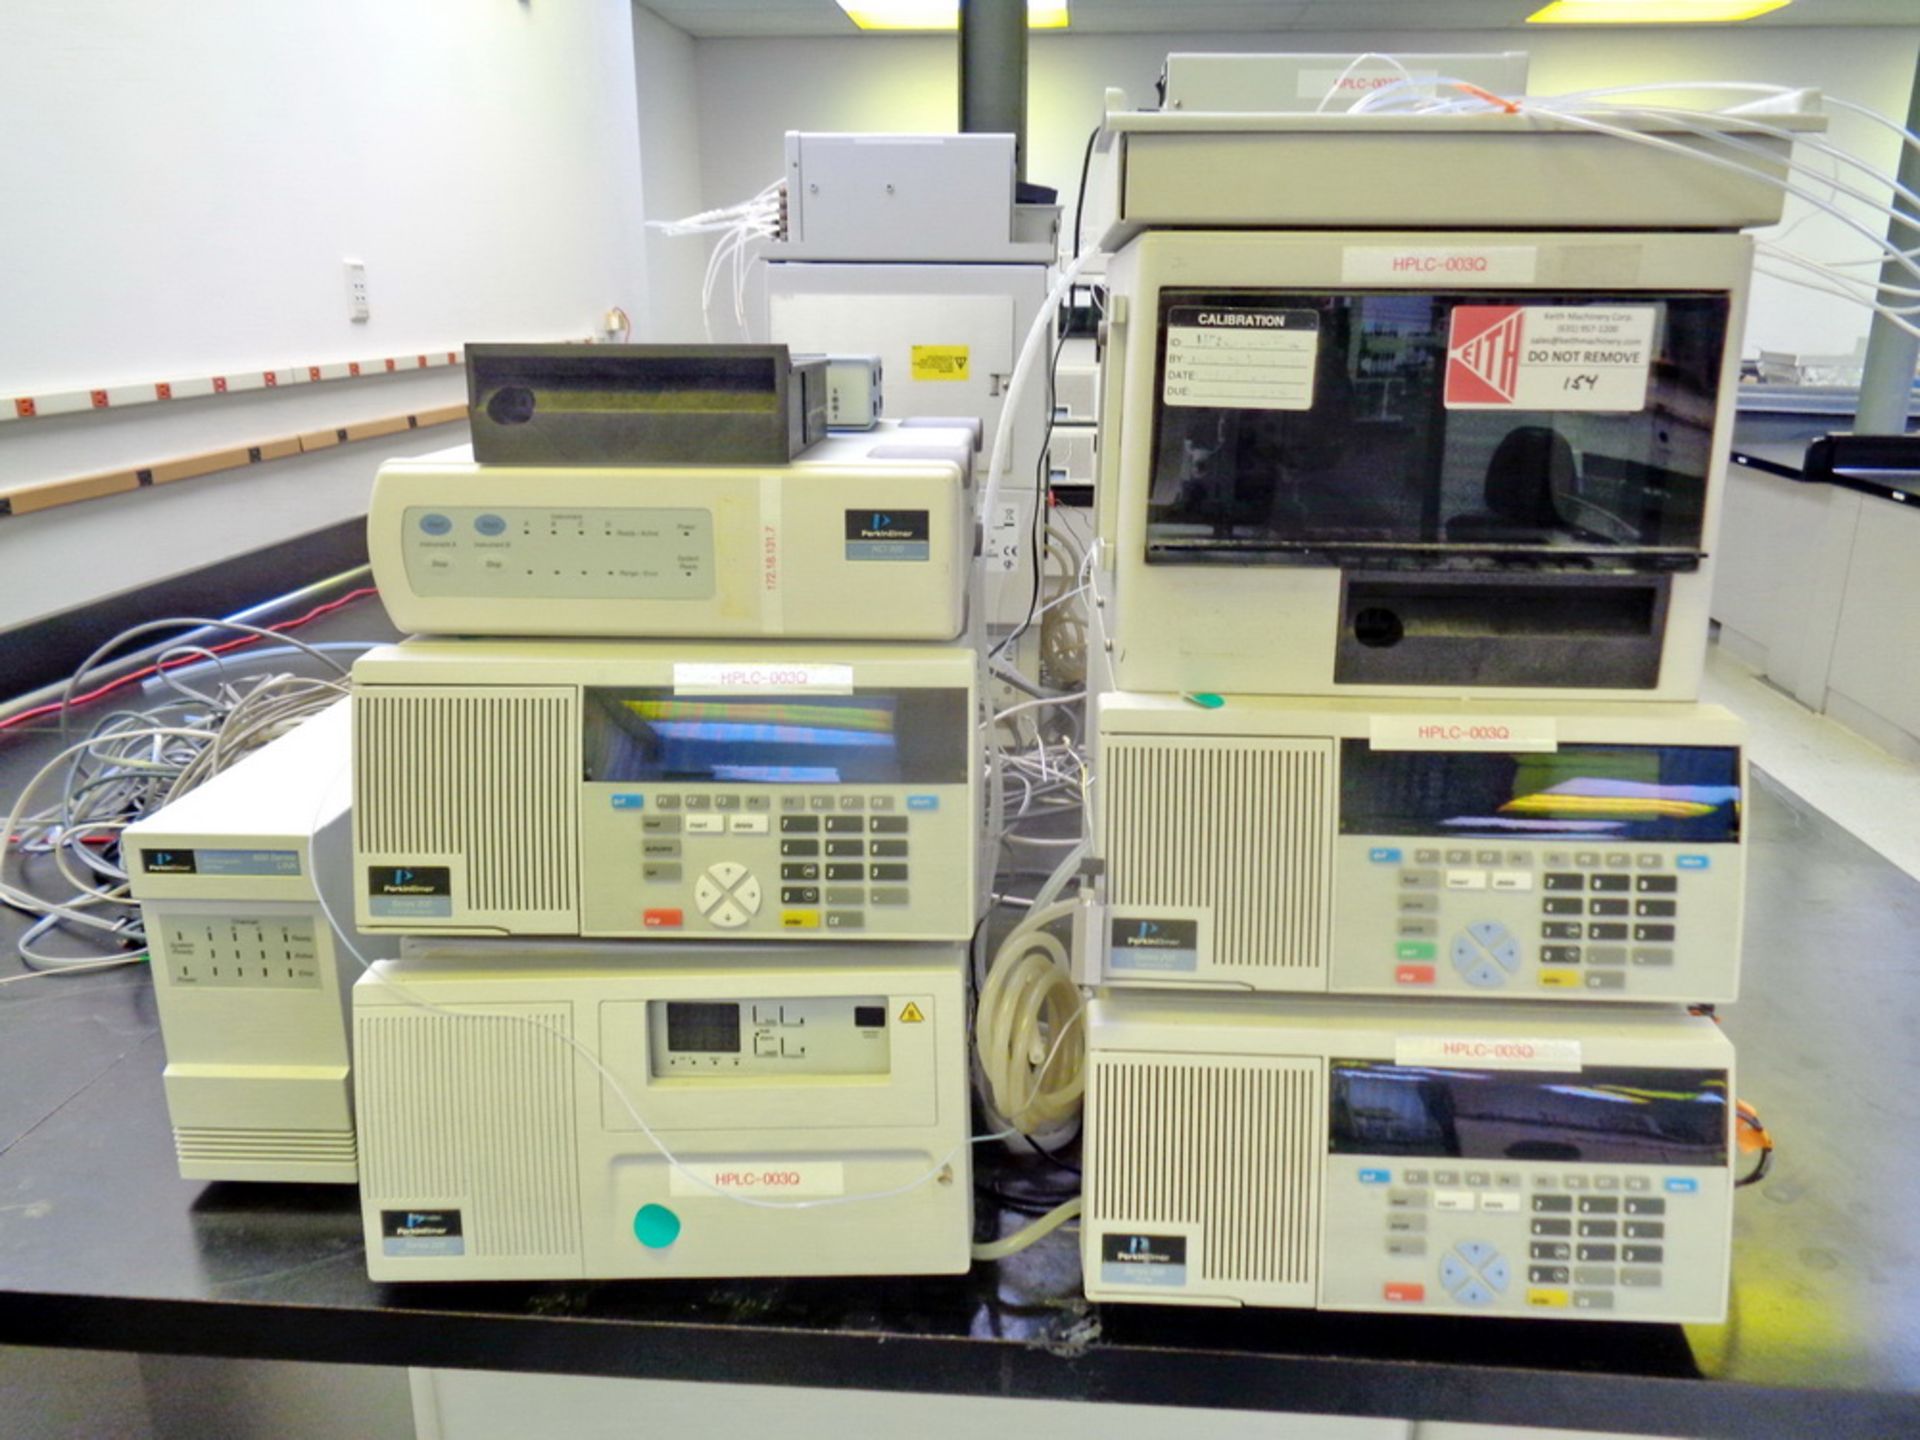 Perkin Elmer series 200 HPLC System with Series 200 Autosampler, Series 200 Pump, UV/VIS Detector